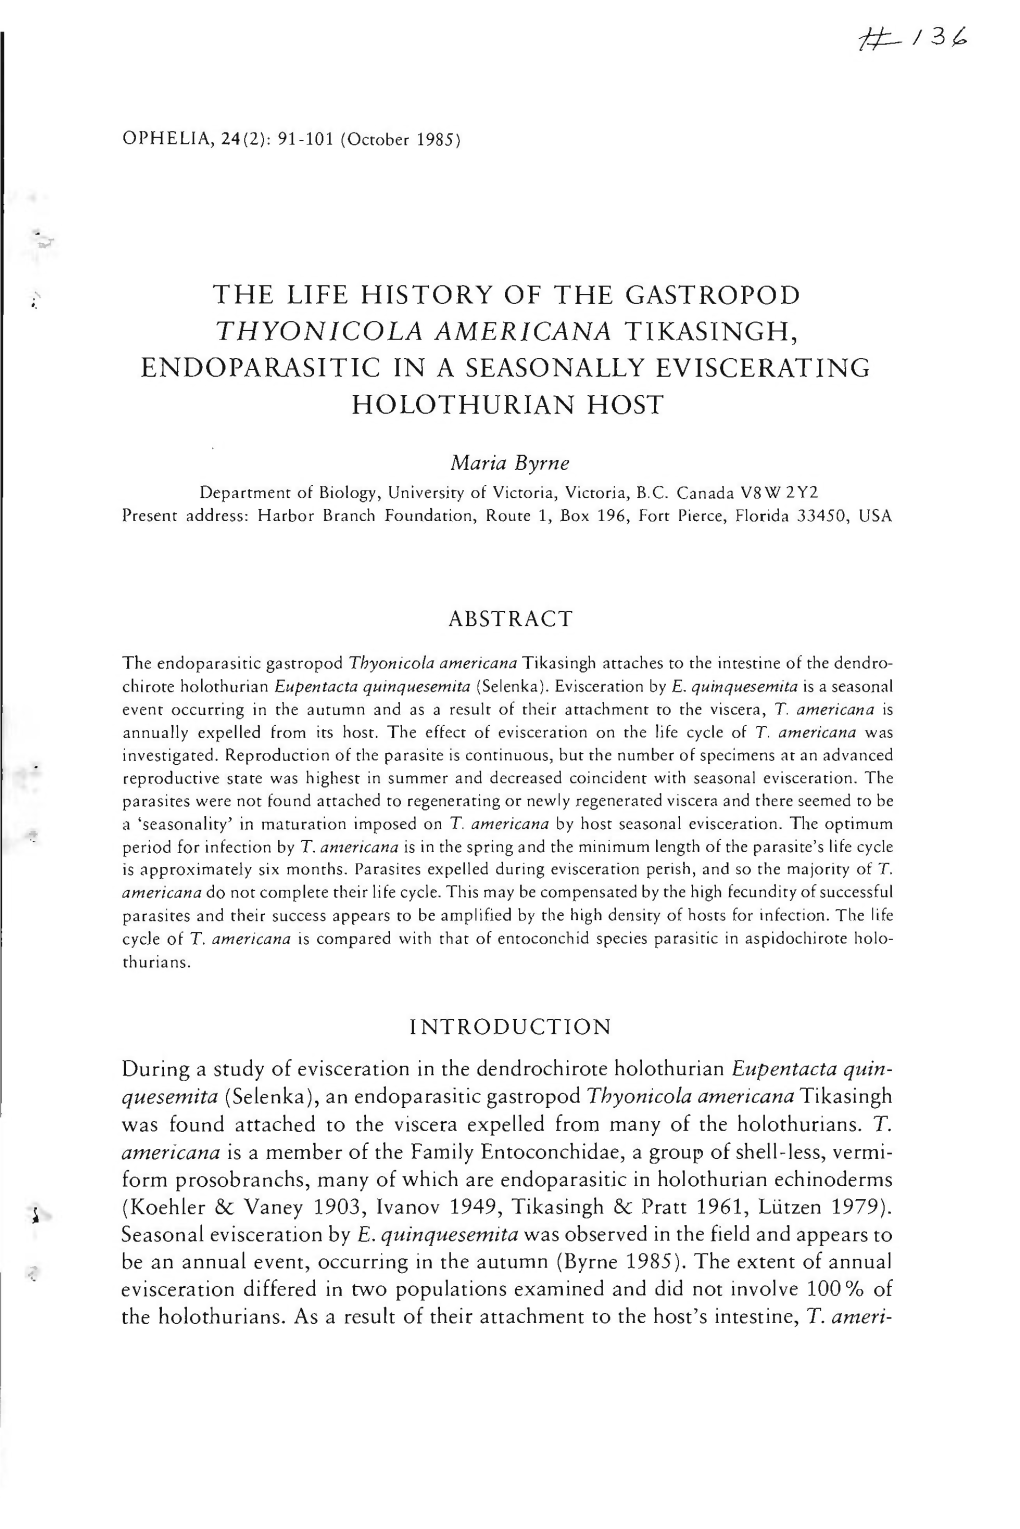 The Life History of the Gastropod Thyonicola Americana Tikasingh, Endoparasitic in a Seasonally Eviscerating Holothurian Host